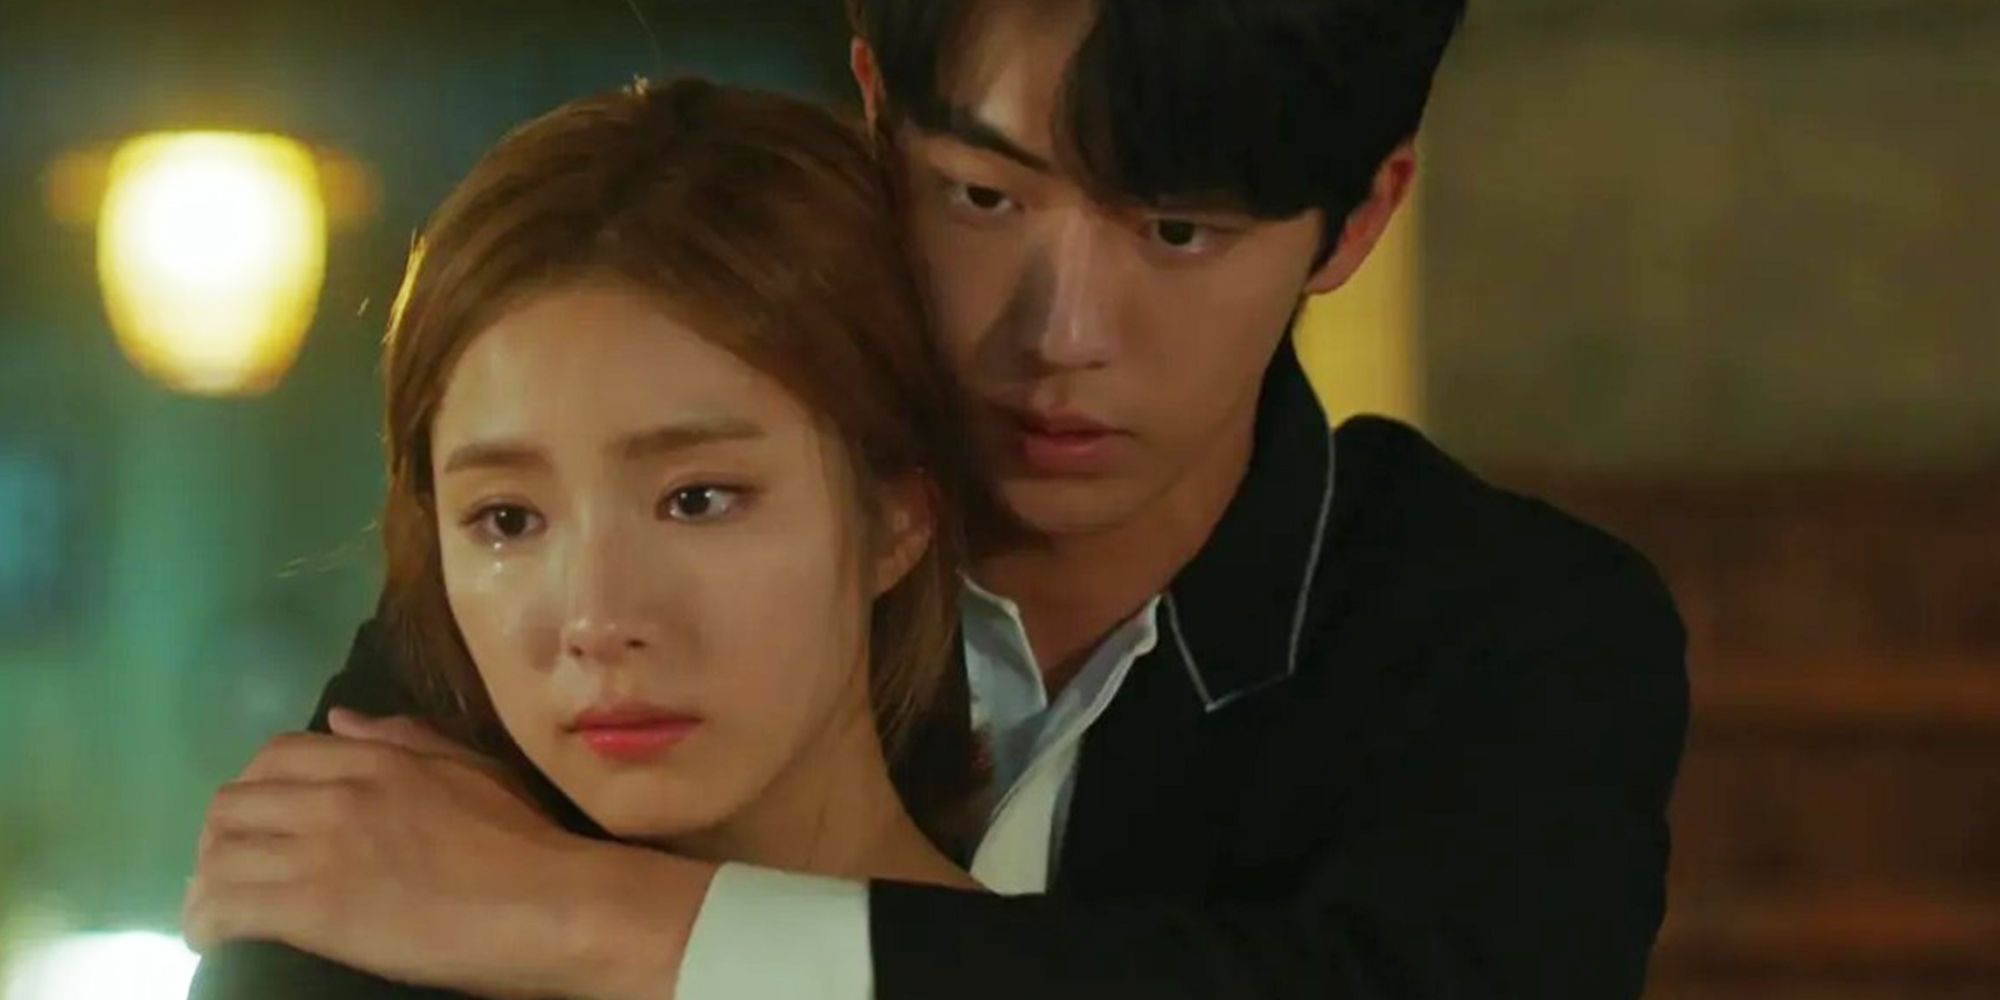 Nam Joo‑hyuk as Ha‑baek and Shin Se‑kyung as Yoon So‑ah in The Bride Of Habeak